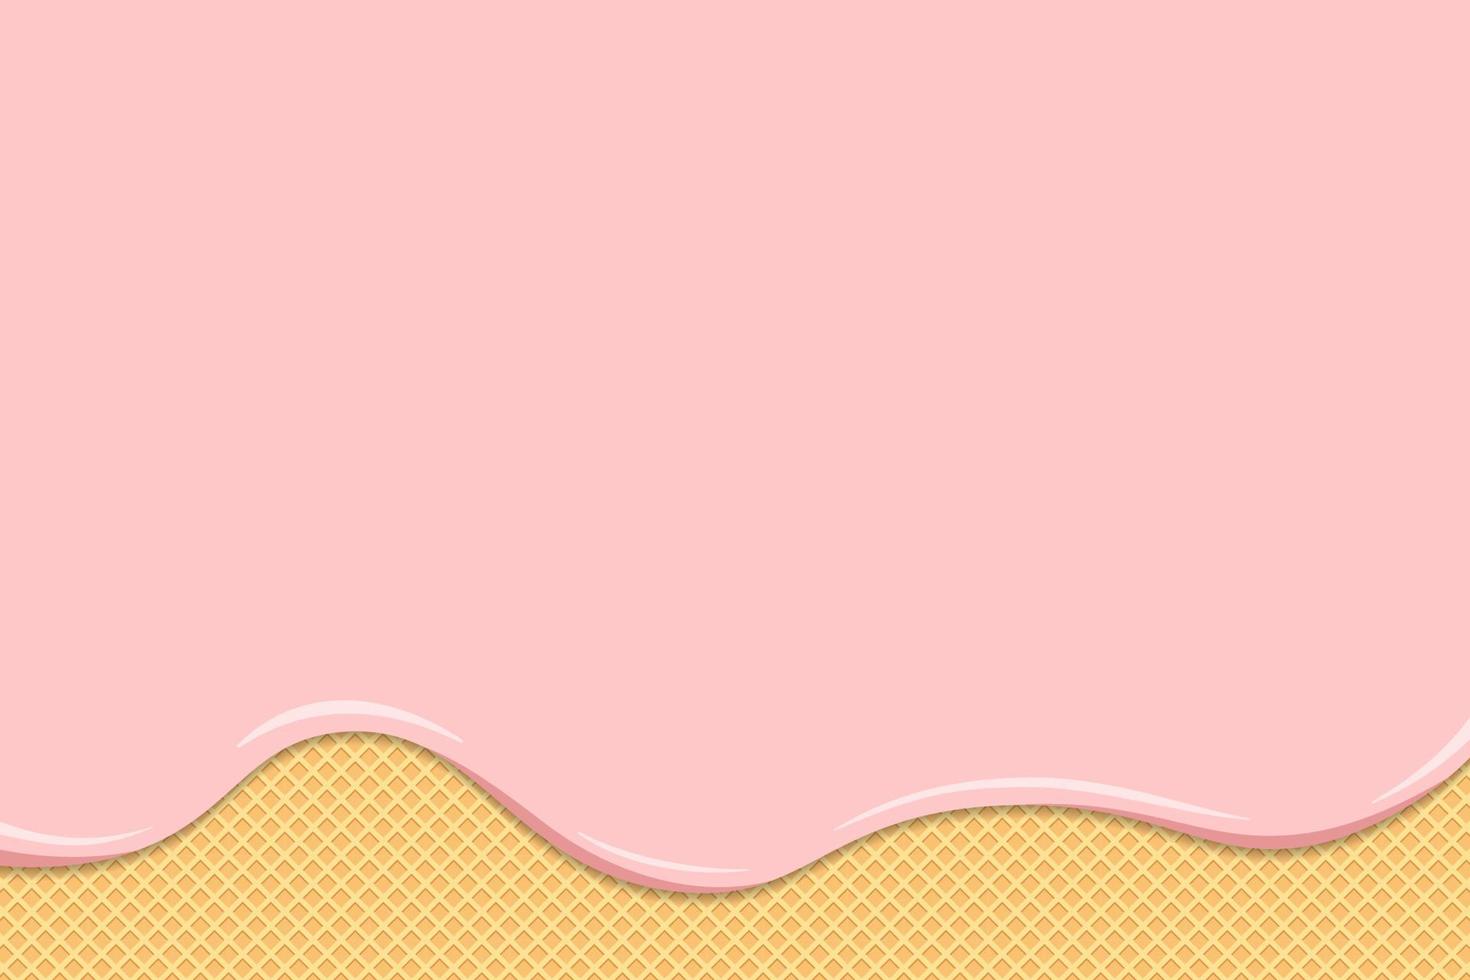 helado o yogur derretido en waffle. goteos de líquido cremoso rosa o leche fluyen sobre galletas crujientes tostadas. textura de pastel dulce de oblea glaseada. plantilla de fondo vectorial para banner con espacio para texto vector